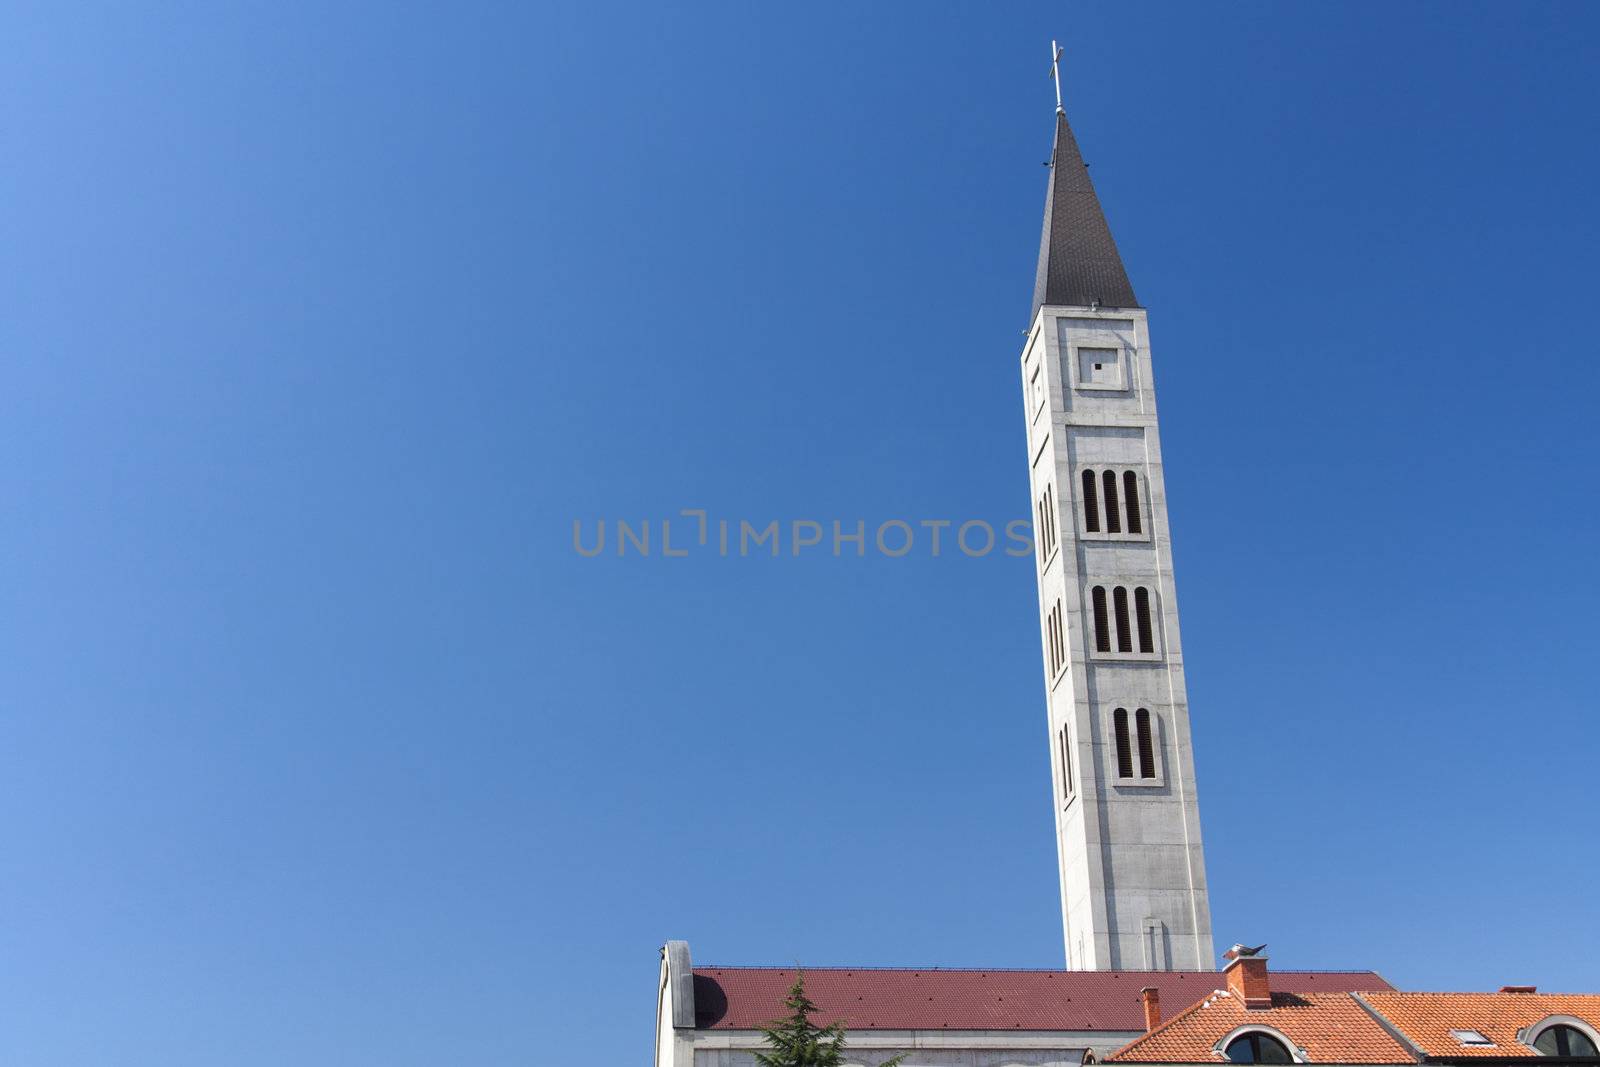 The Catholic church in Mostar